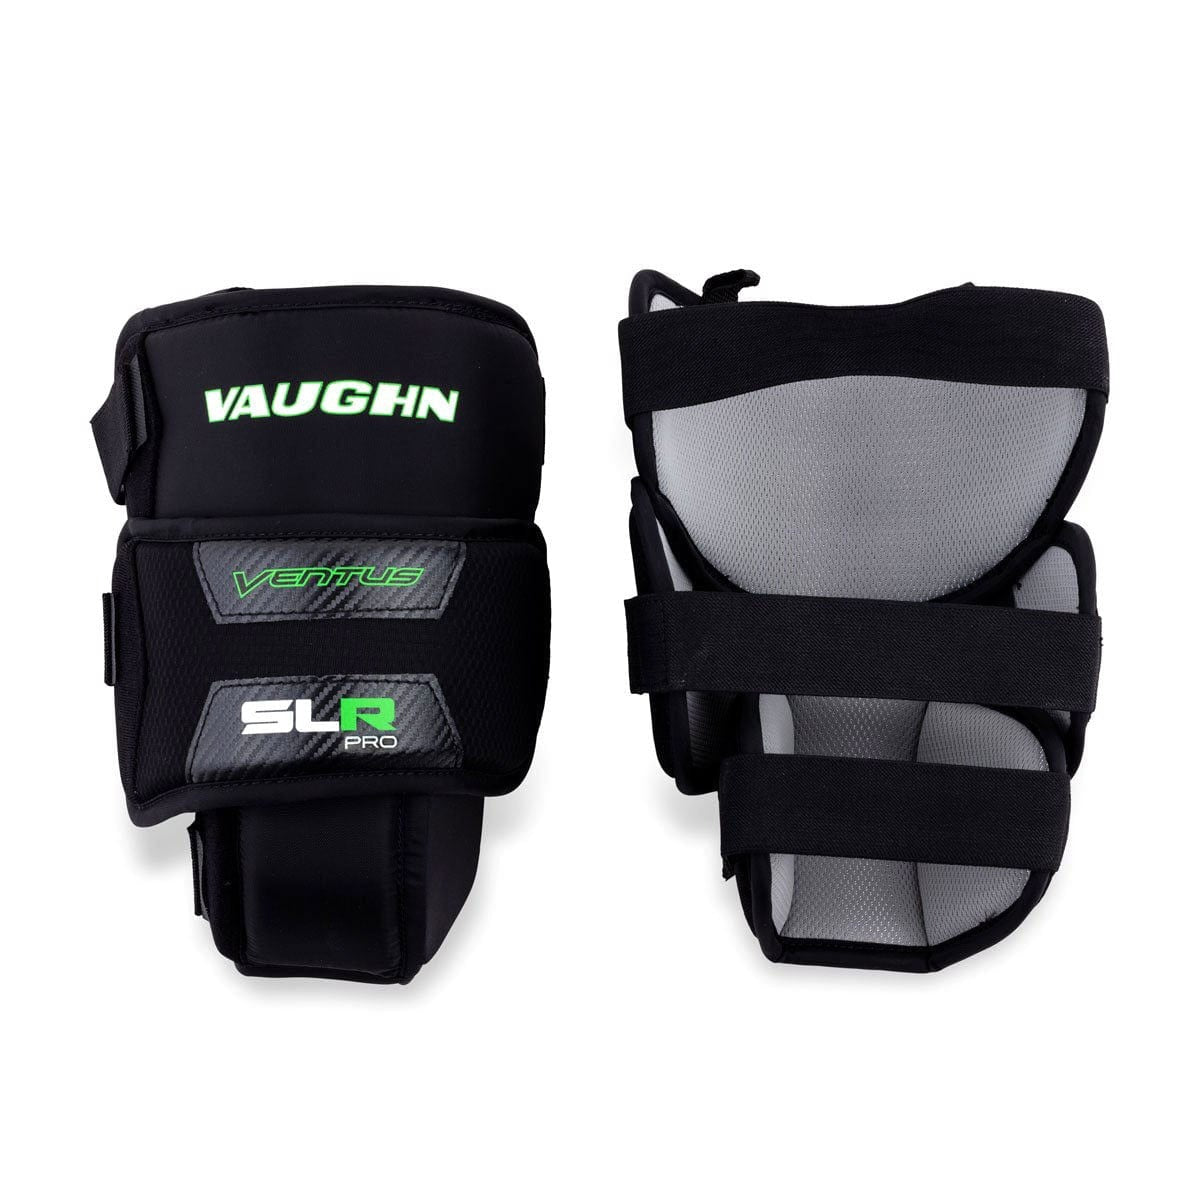 Vaughn Ventus SLR Pro Senior Knee Pads